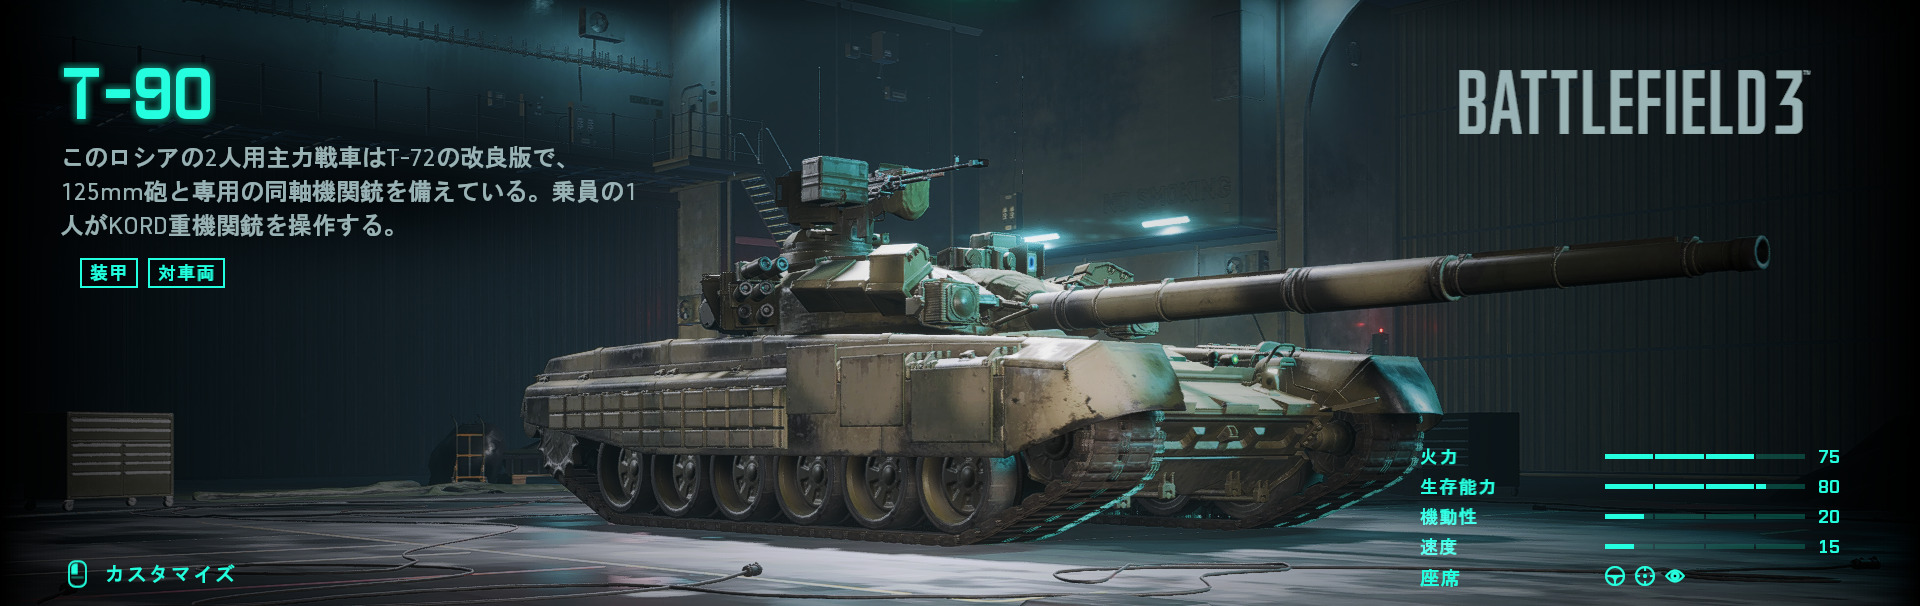 T-90U.jpg